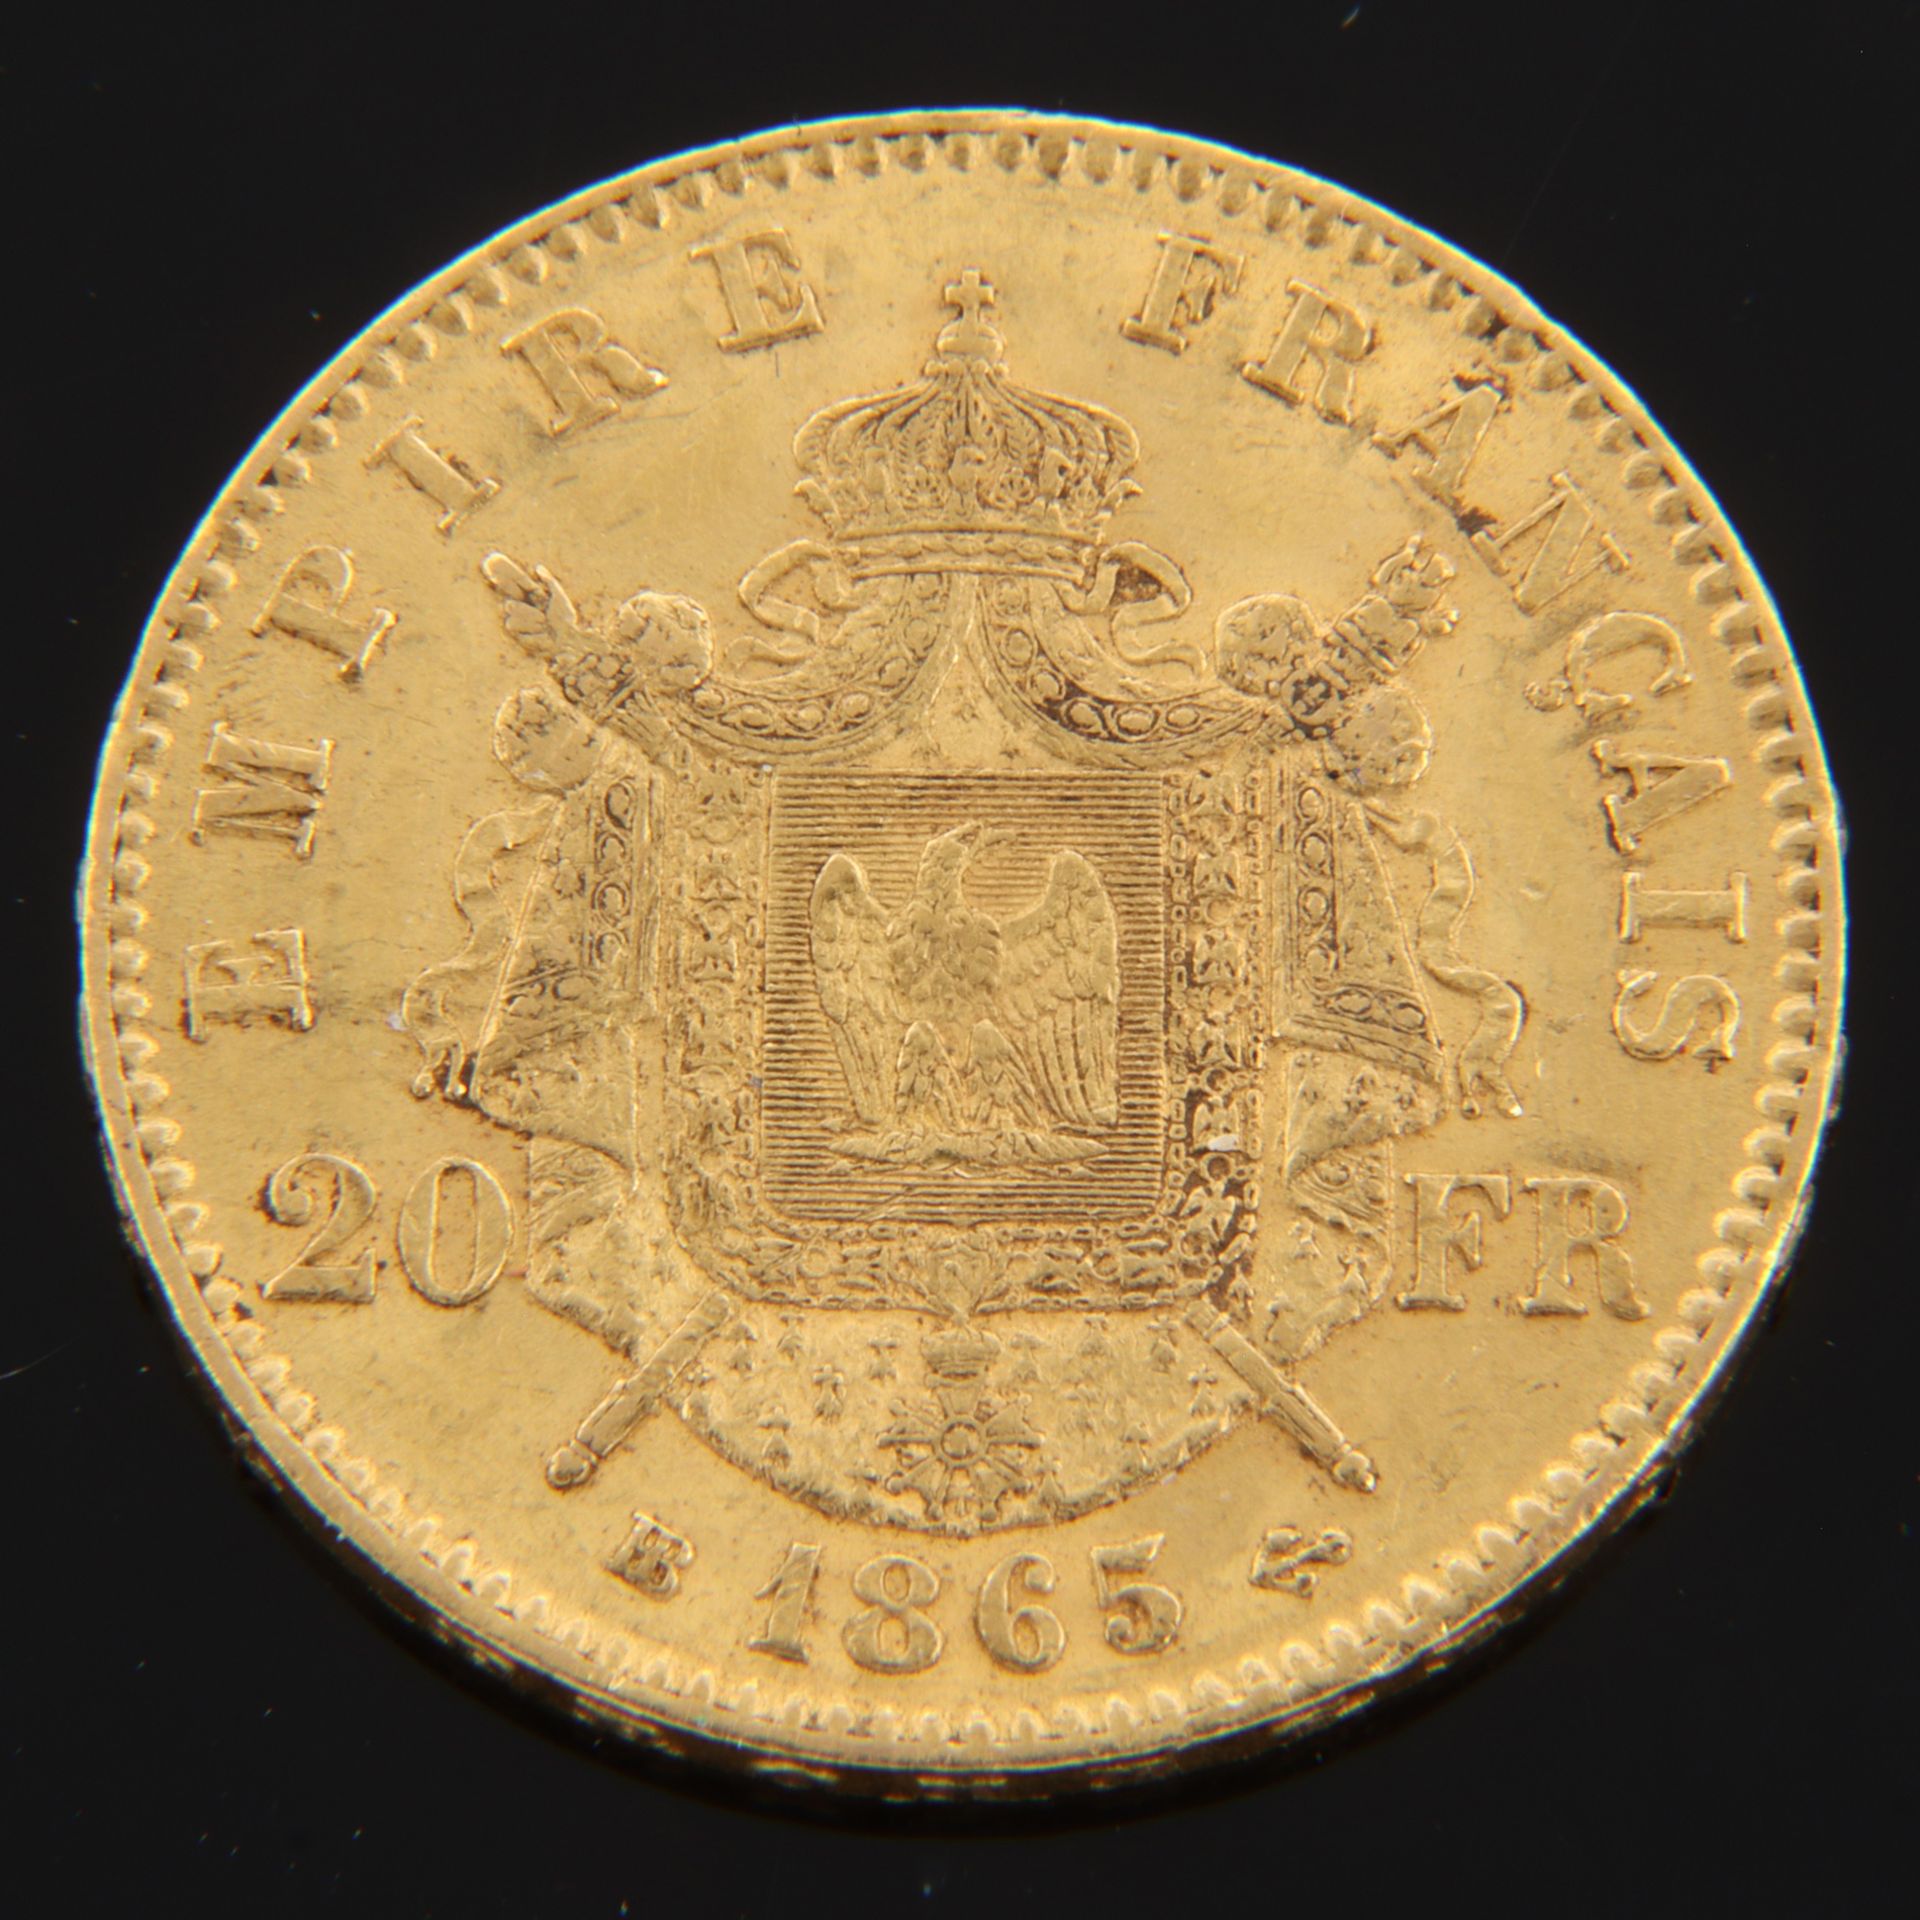 Goldmünze - 20 Francs - Image 2 of 2